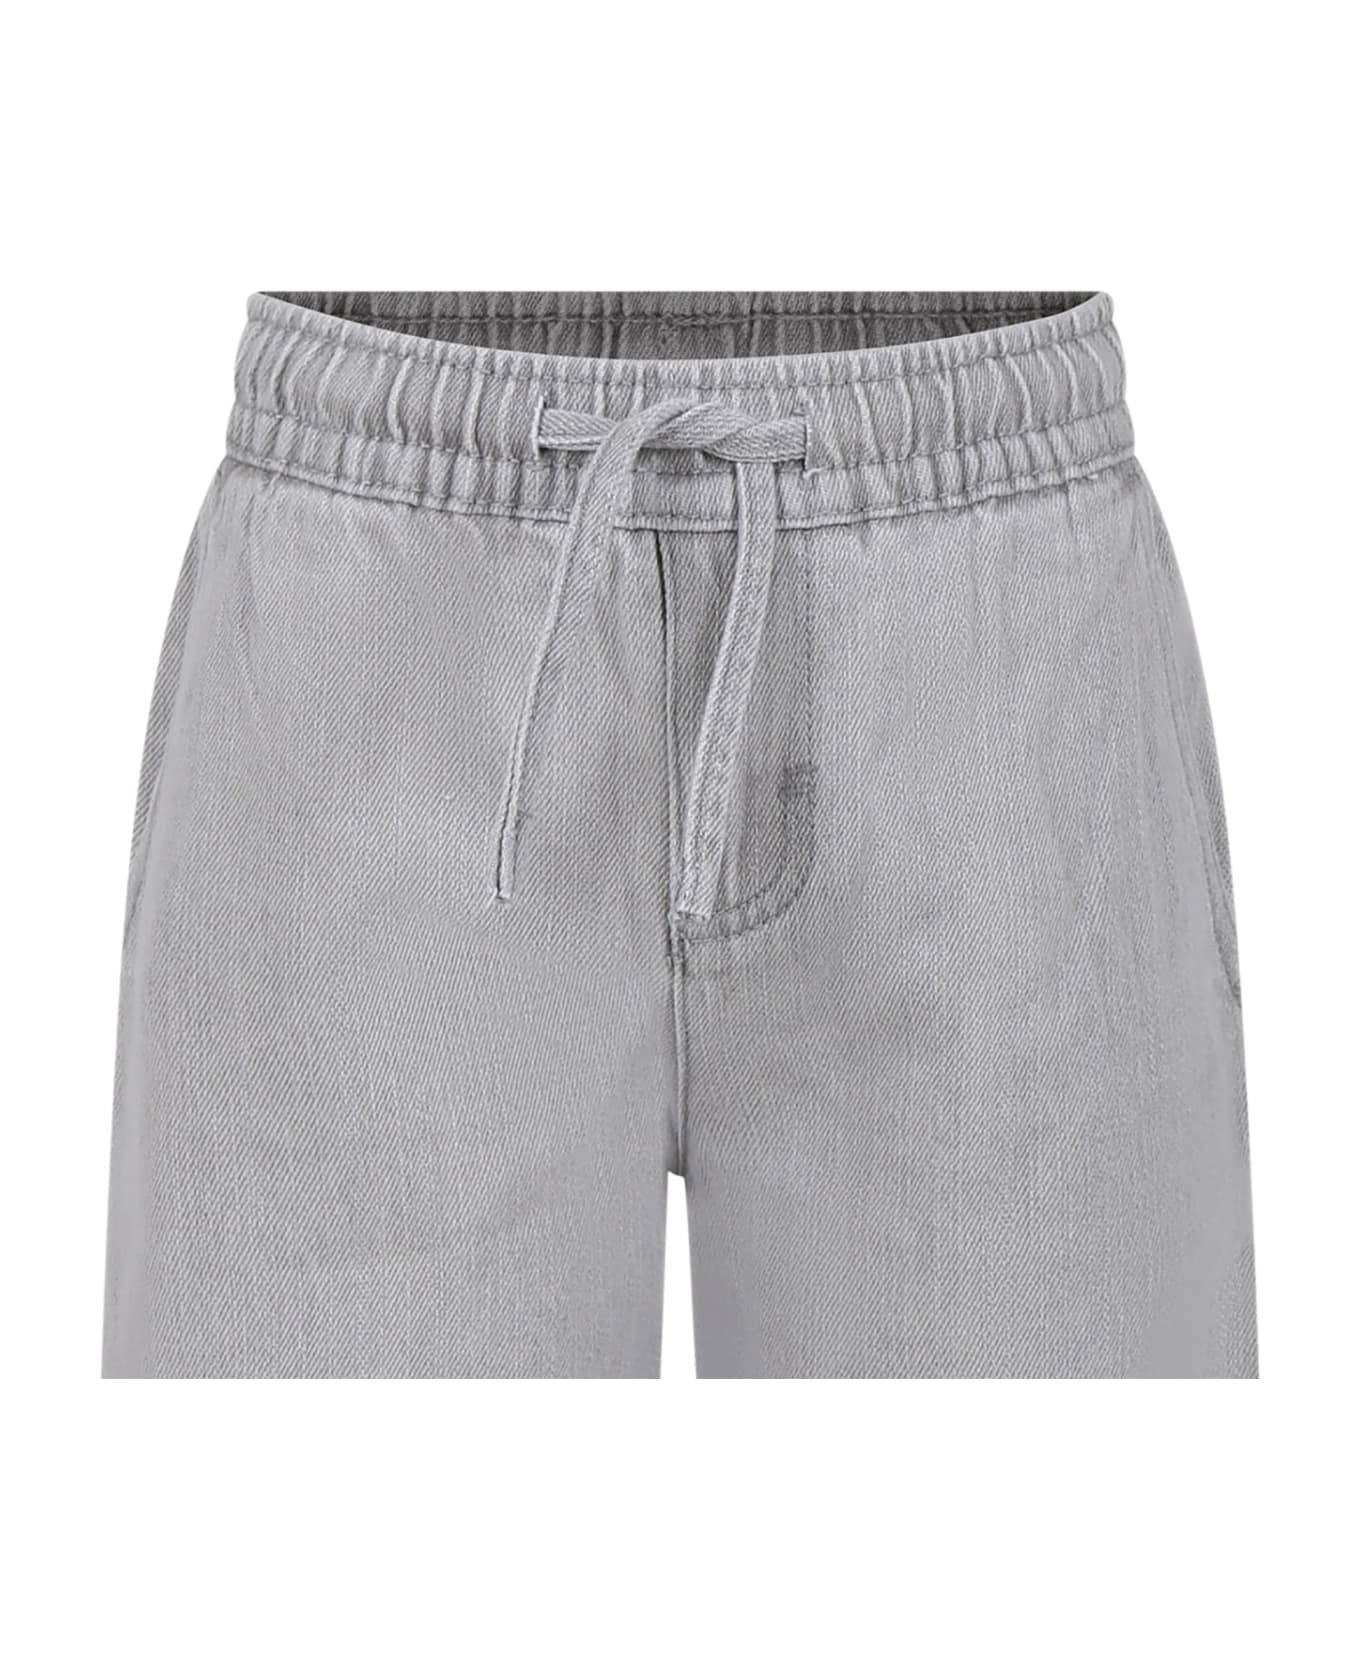 Stella McCartney Kids Gray Casual Shorts For Boy - Grey ボトムス